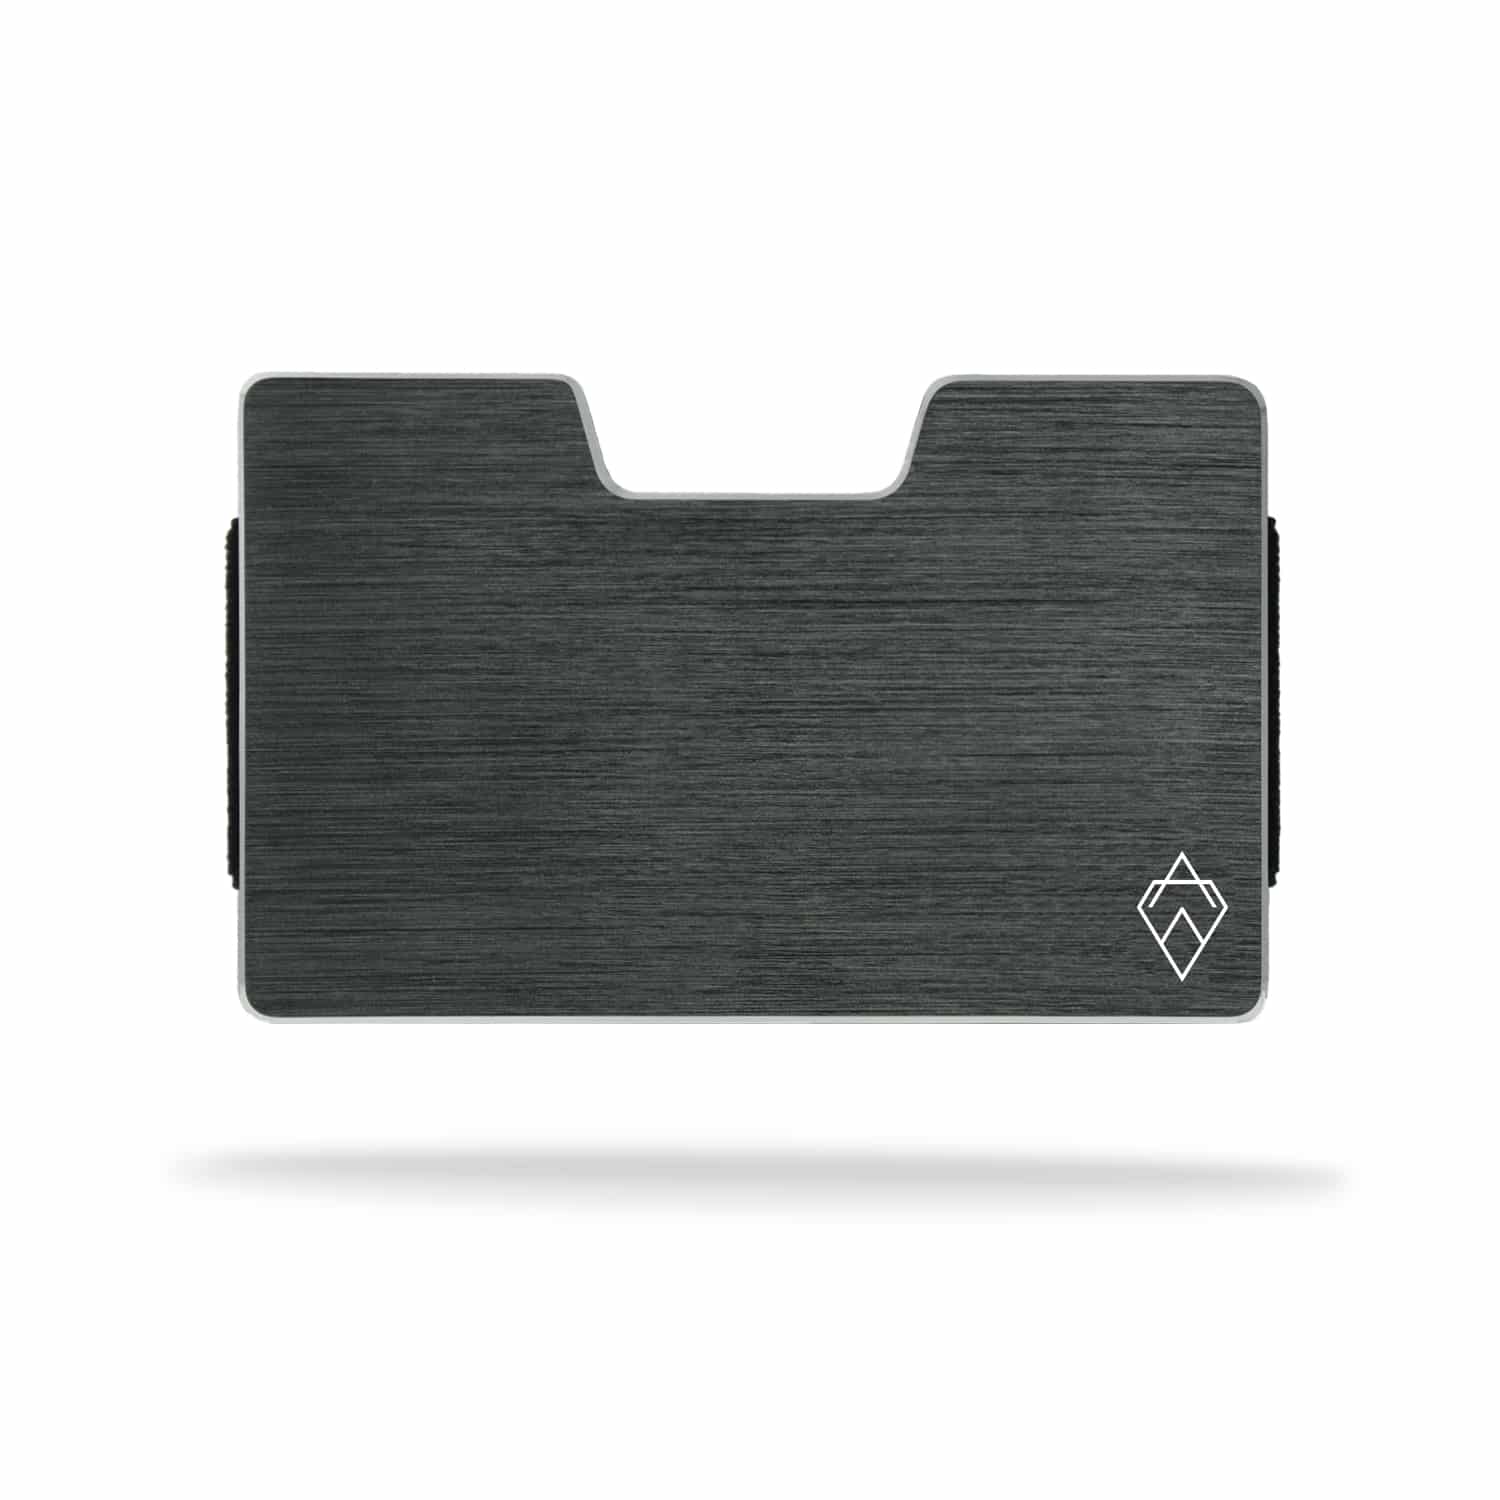 brushed grey titanium RFID blocking credit card holder wallet with money clip